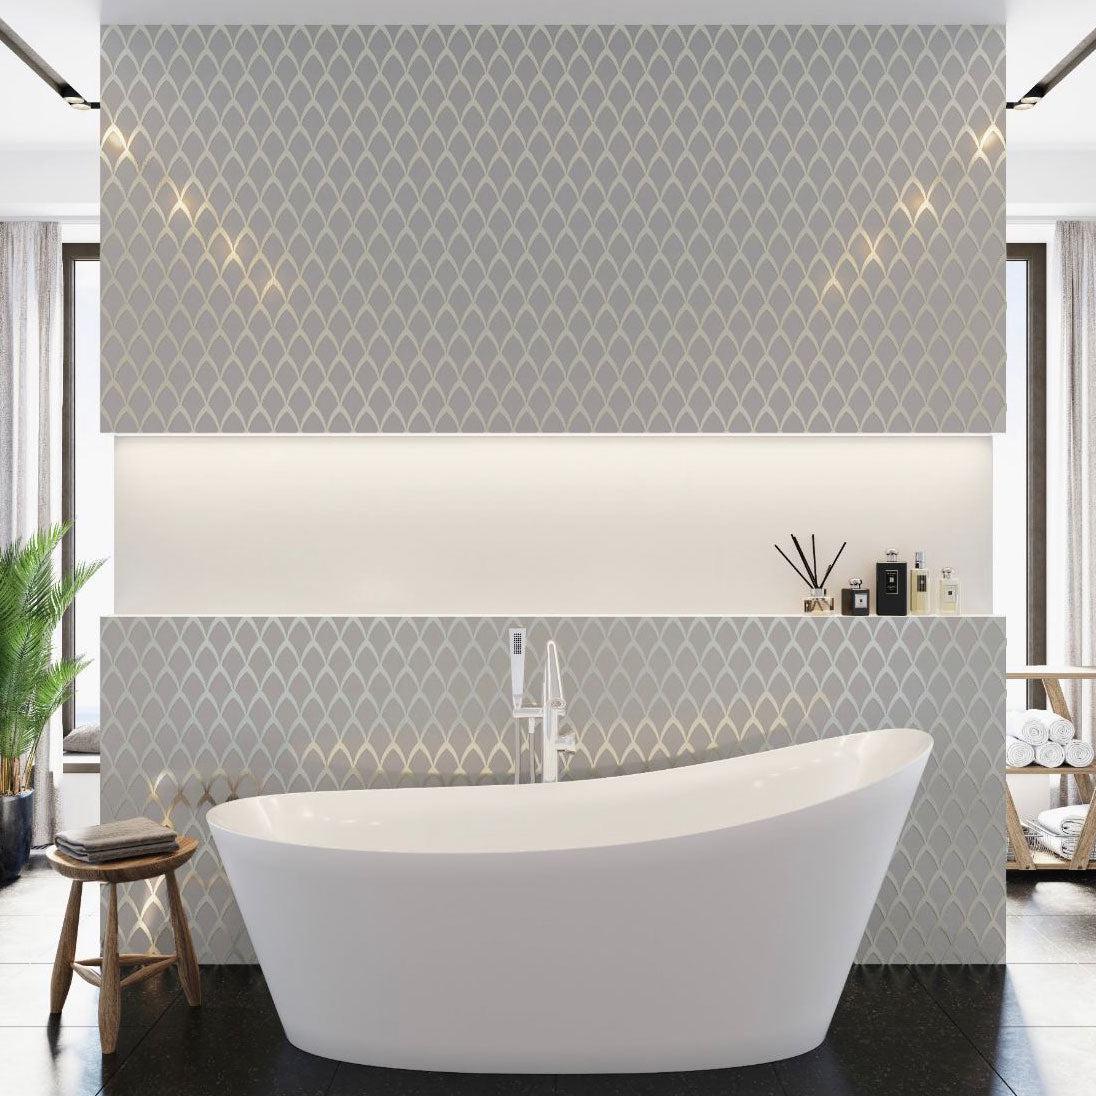 White Deco Fan Glass Mosaic Tile Bathtub Surround for an Elegant Vintage Bathroom